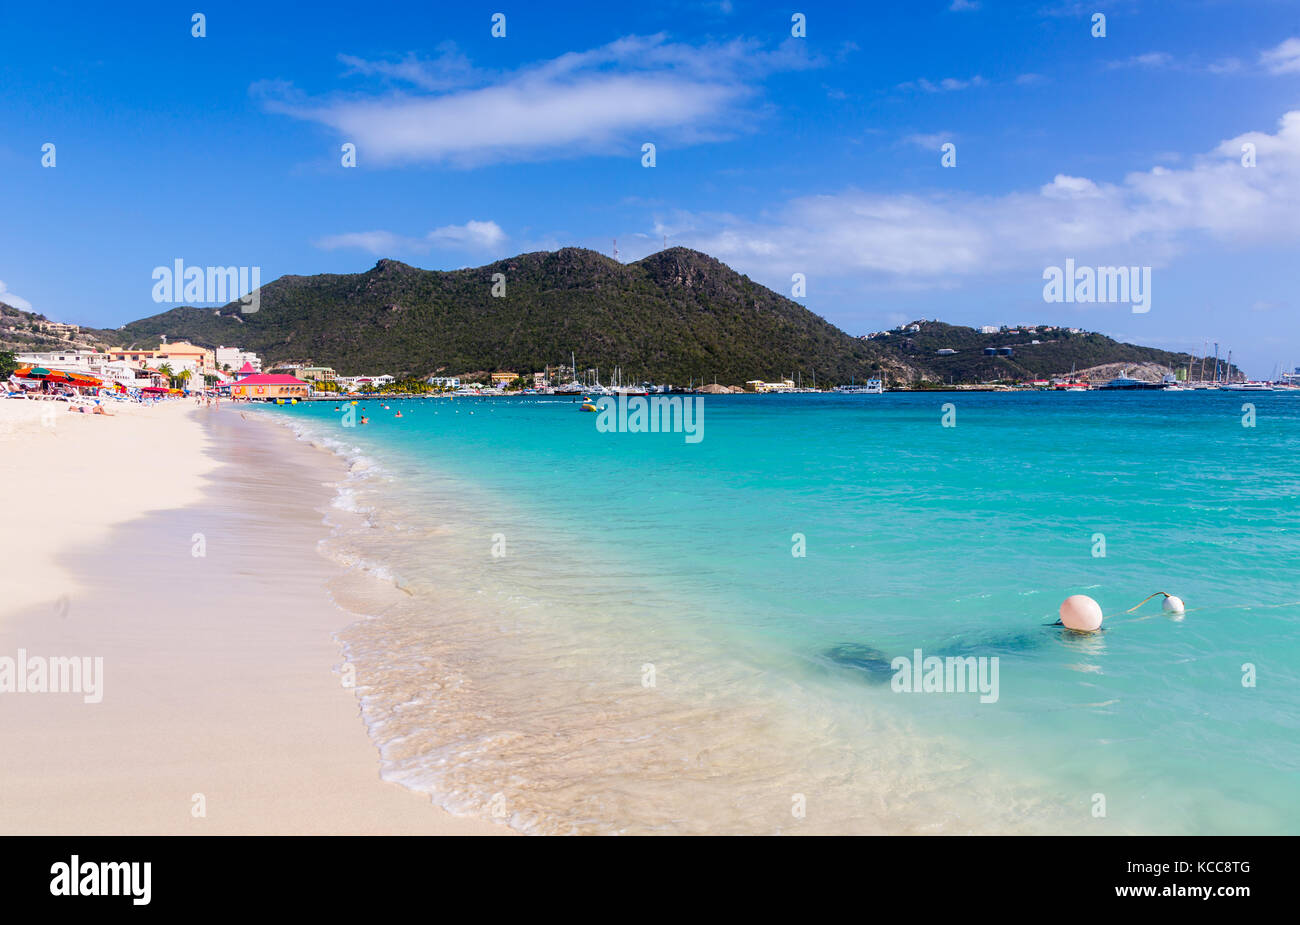 Great Bay beach, Philipsburg, St Maarten Stock Photo